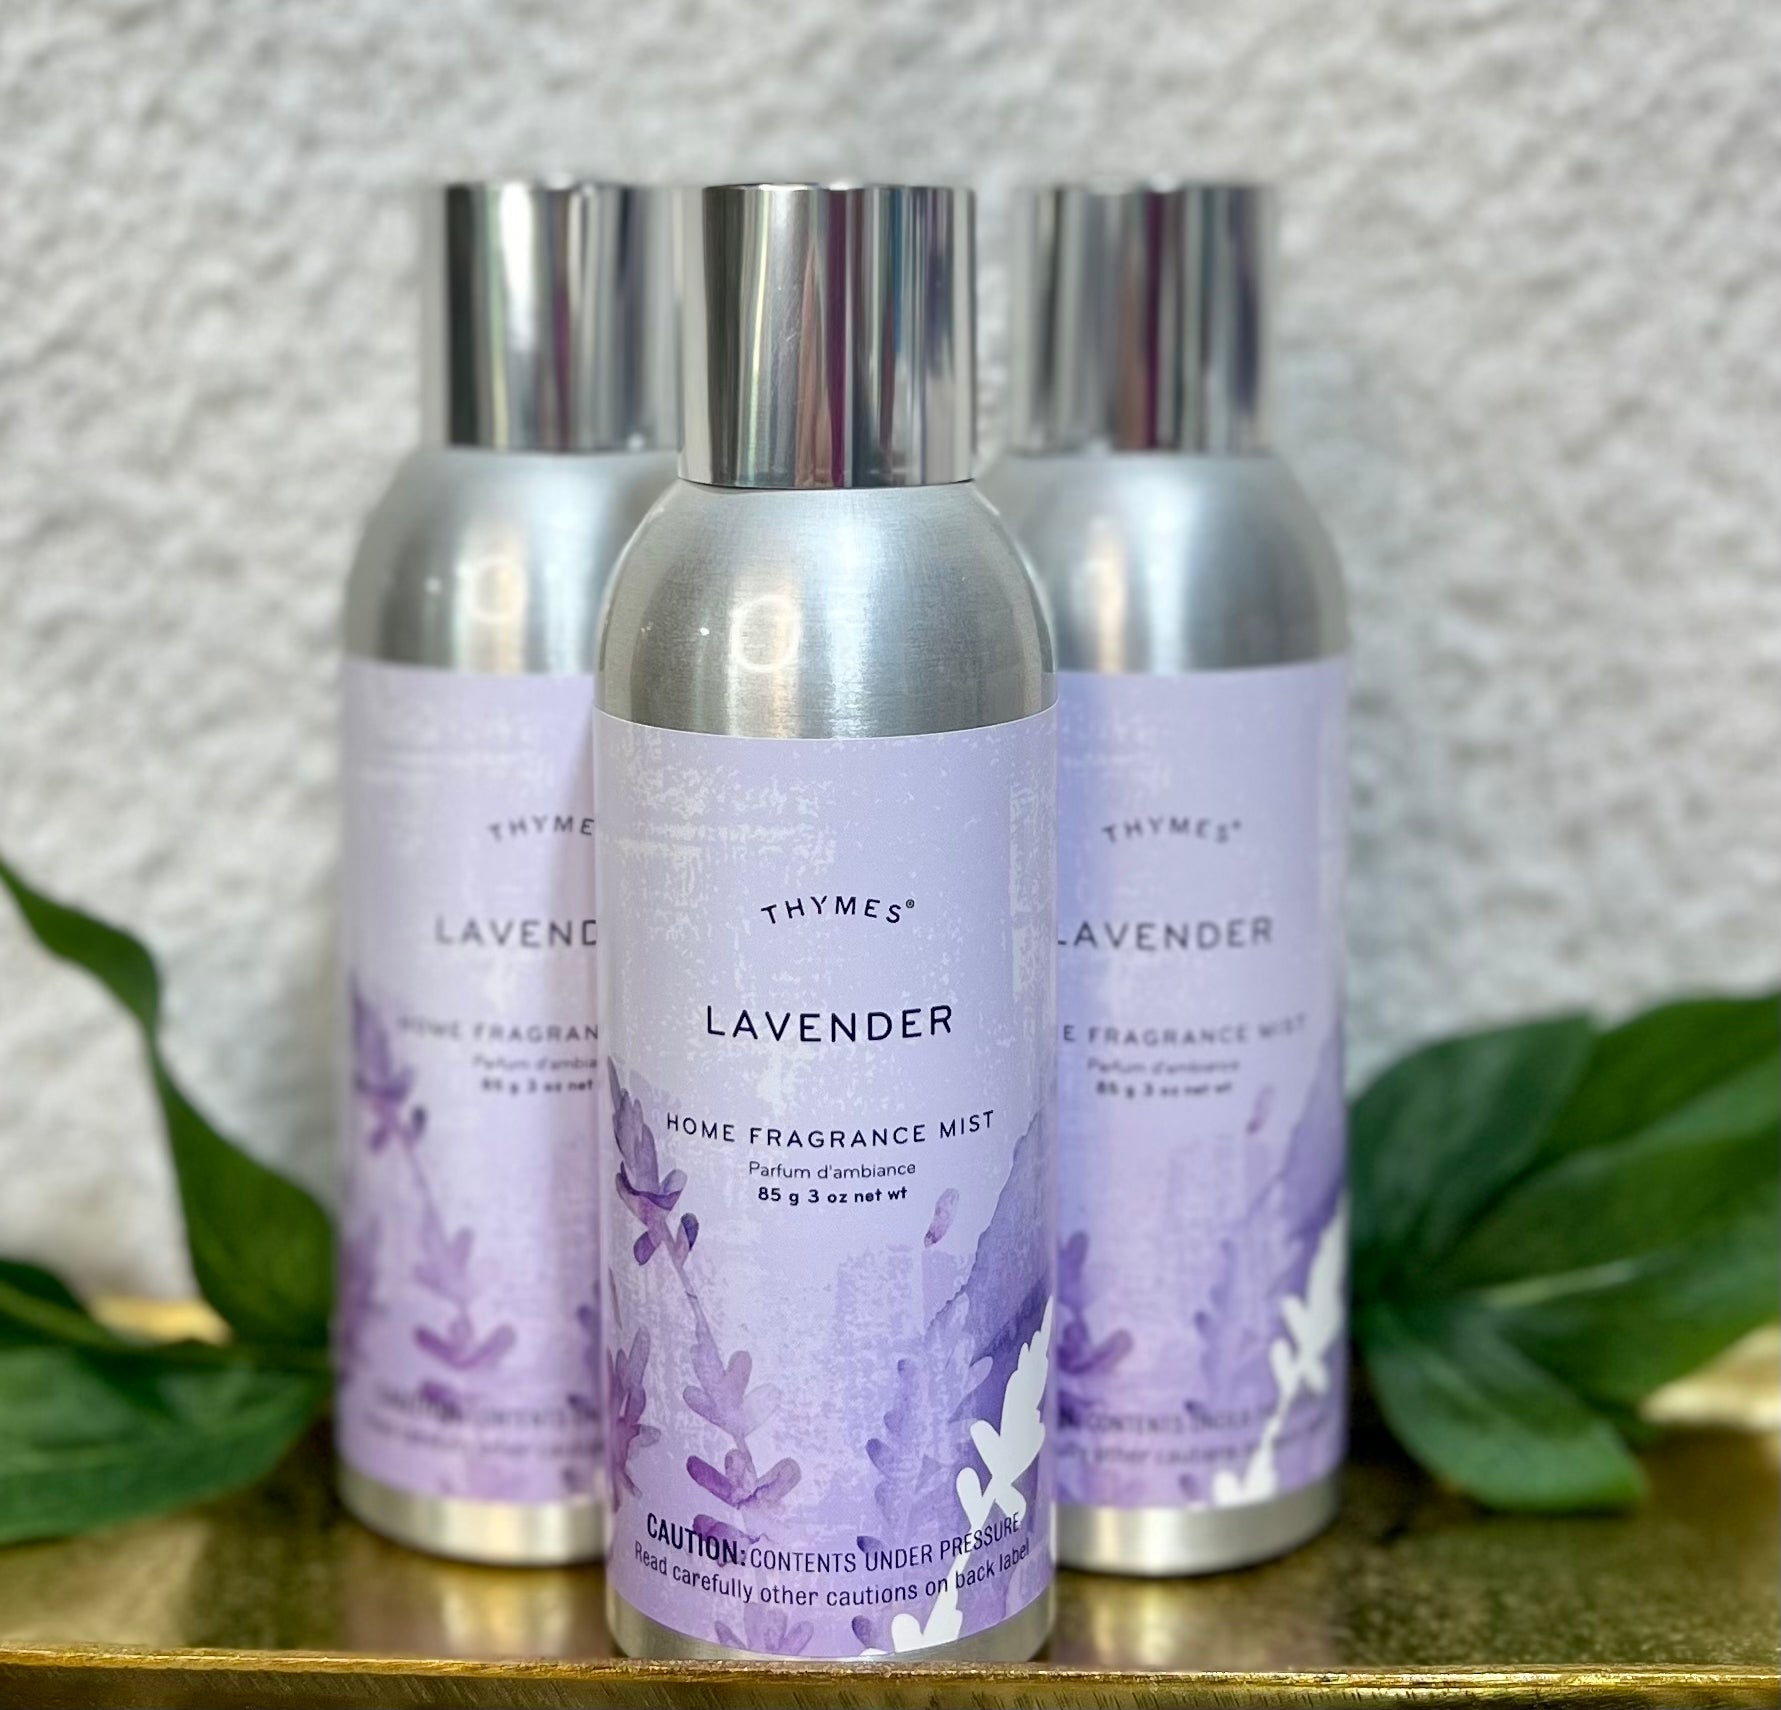 Thymes “Lavender” fragrance mist